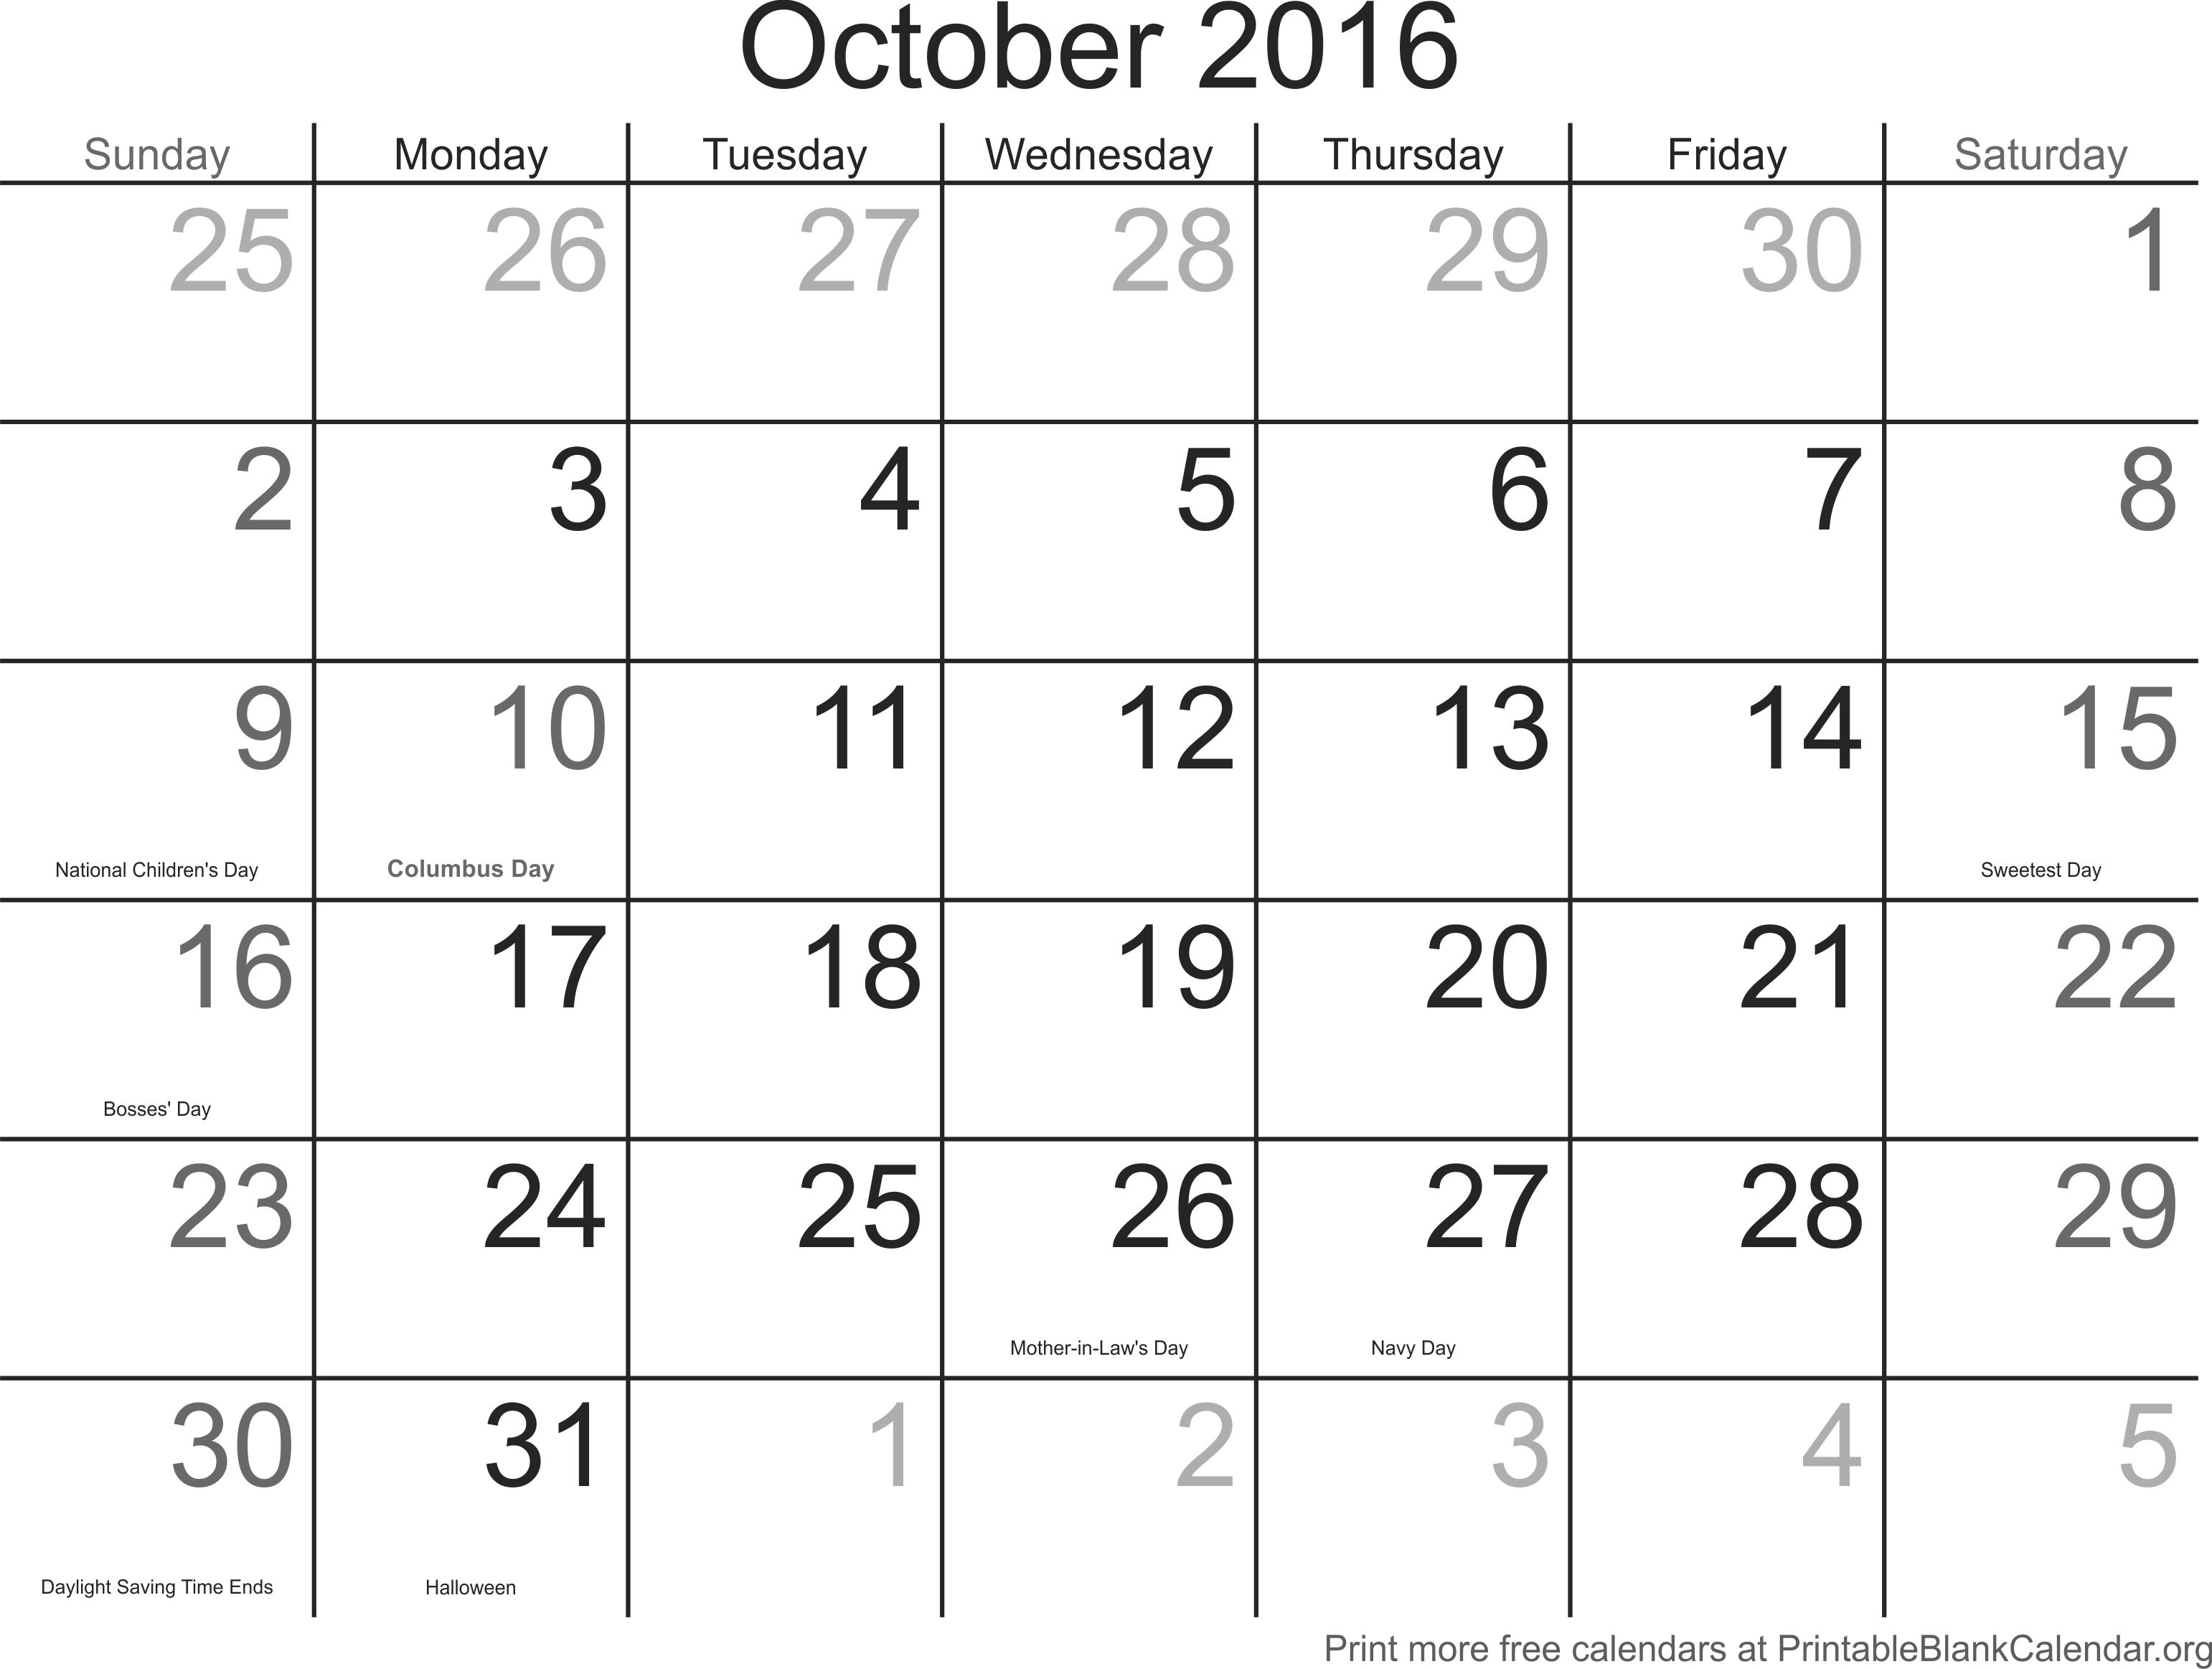 october-2016-free-printable-calendar-printable-blank-calendar